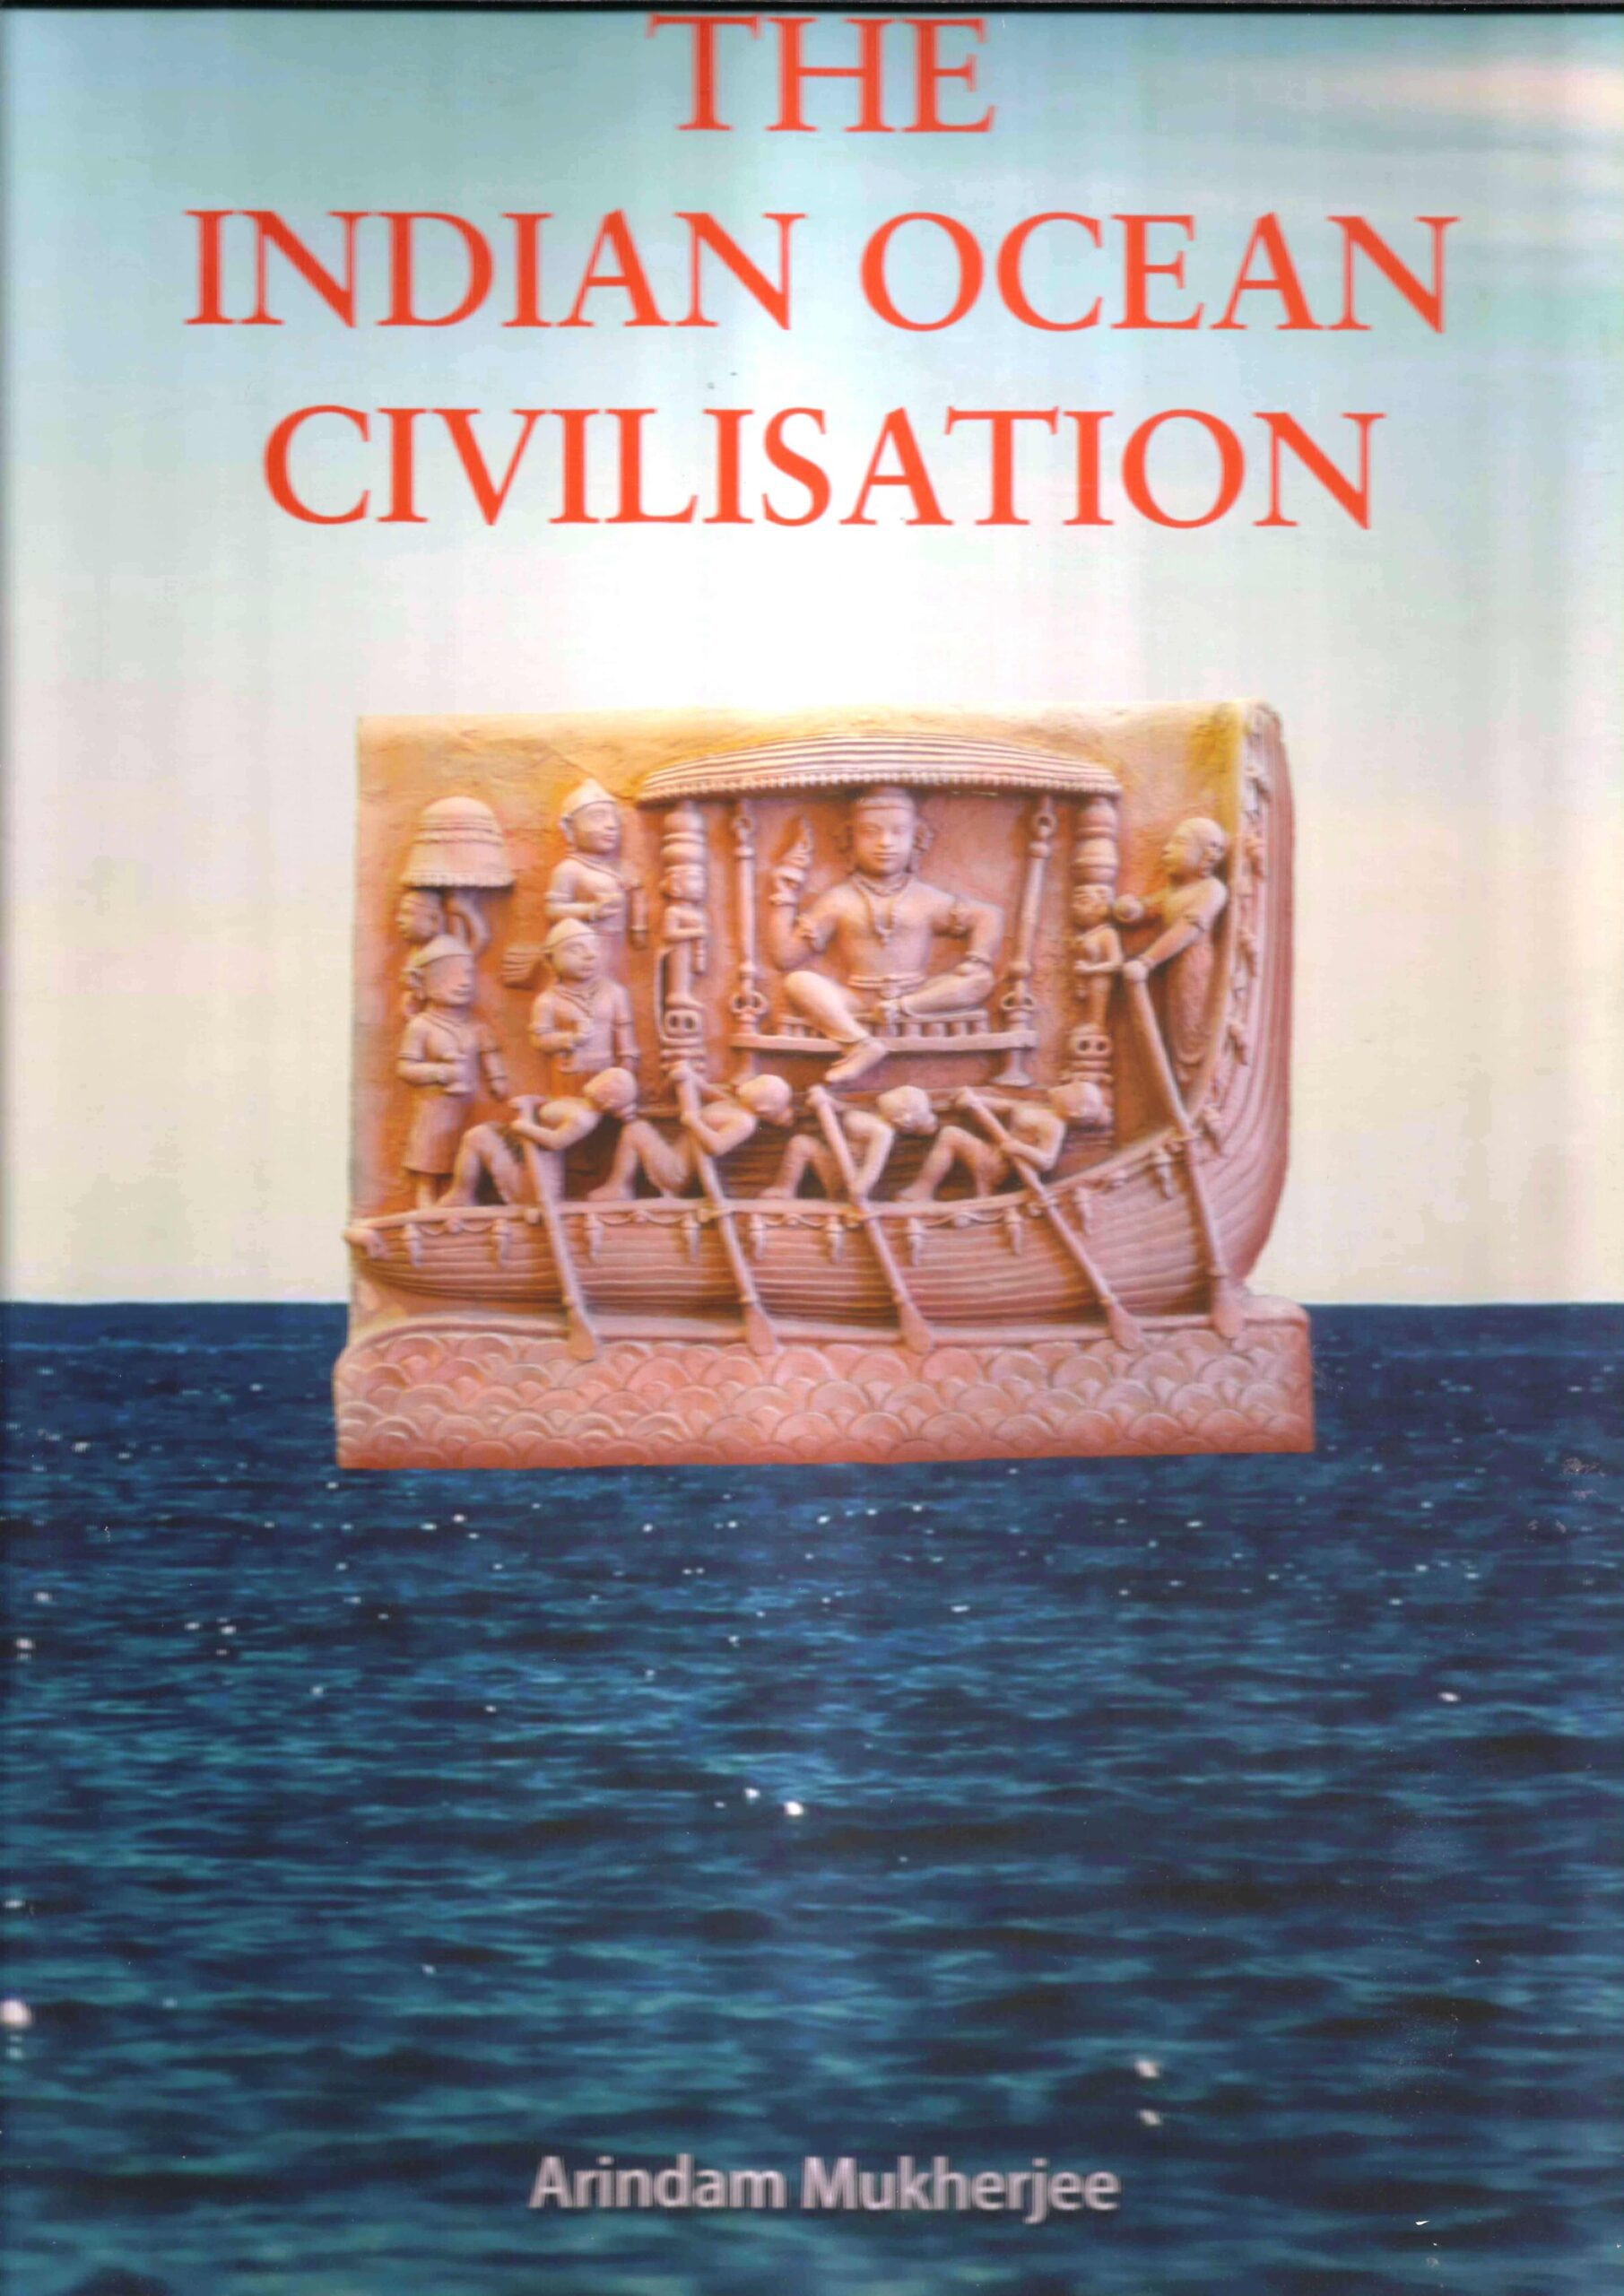 The Indian Ocean civilization